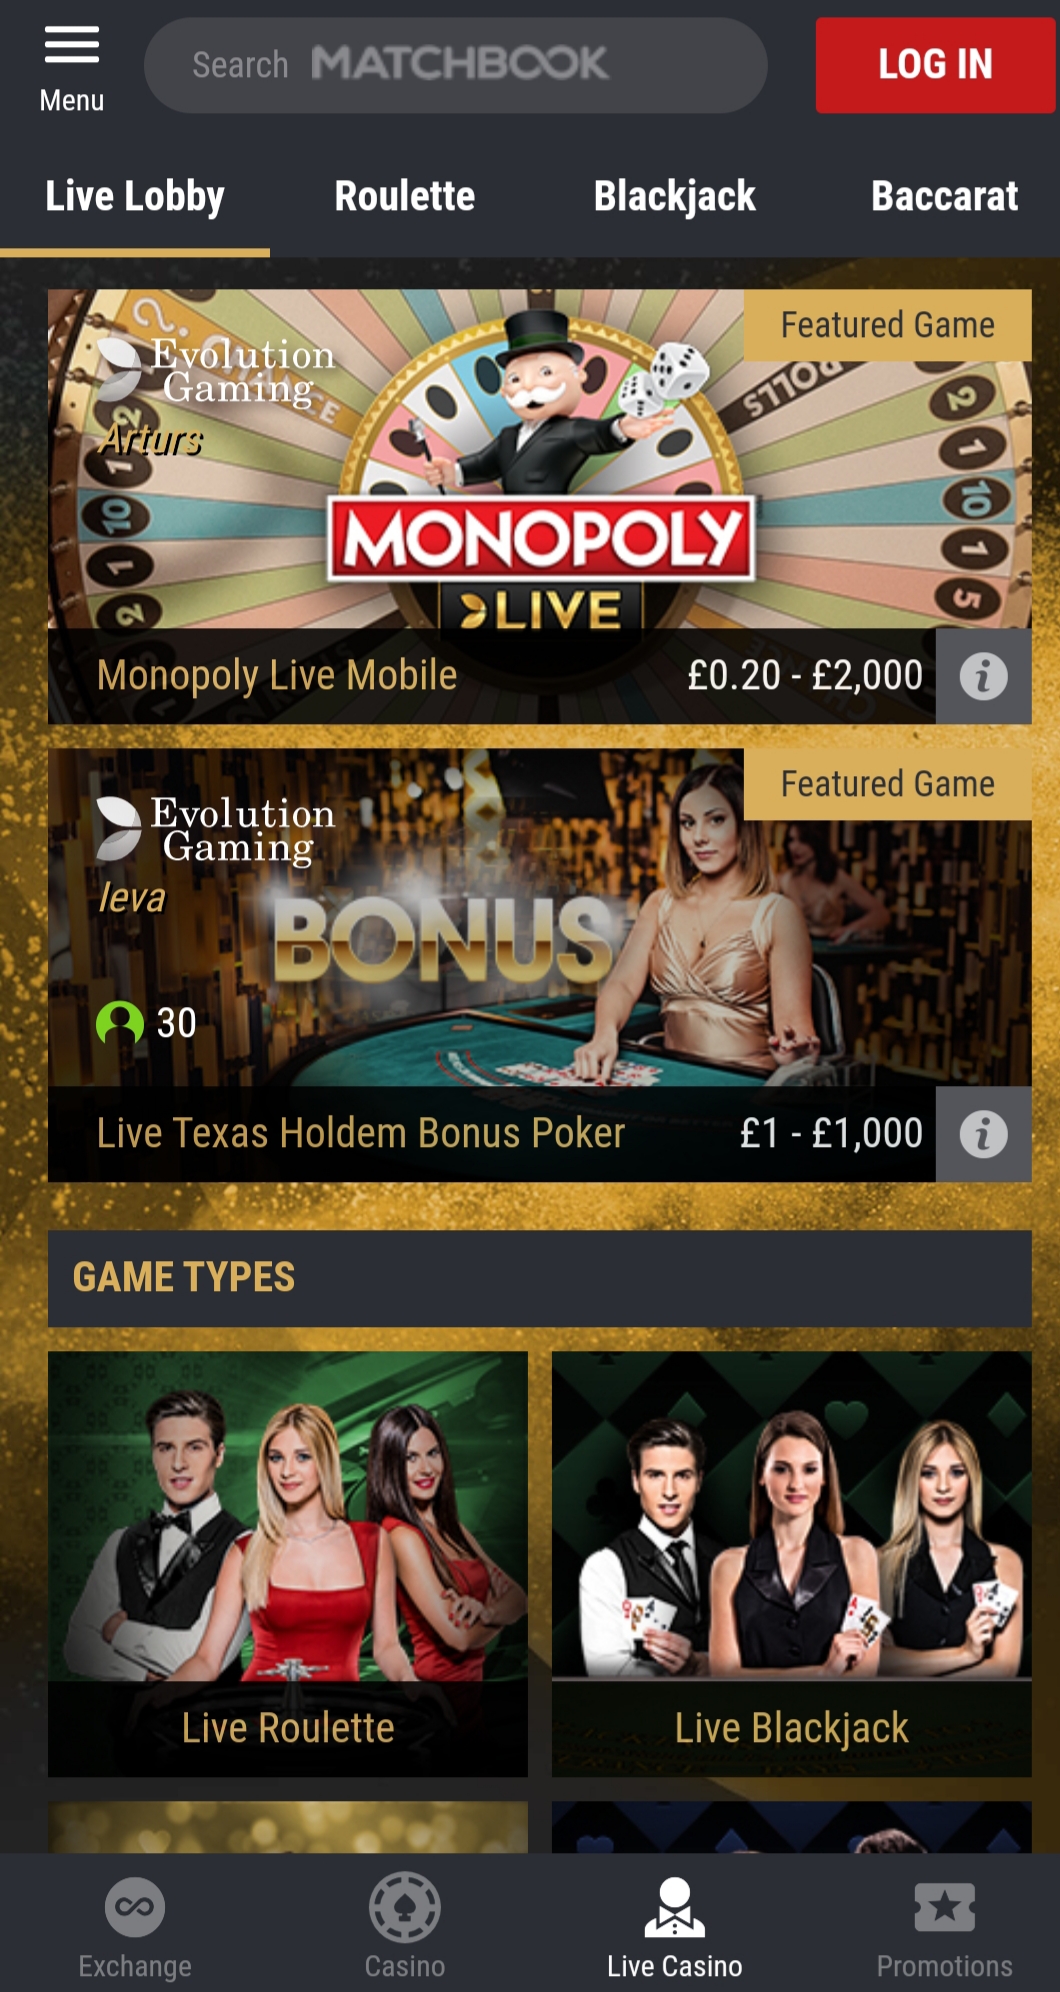 Matchbook Casino Mobile Live Dealer Games Review